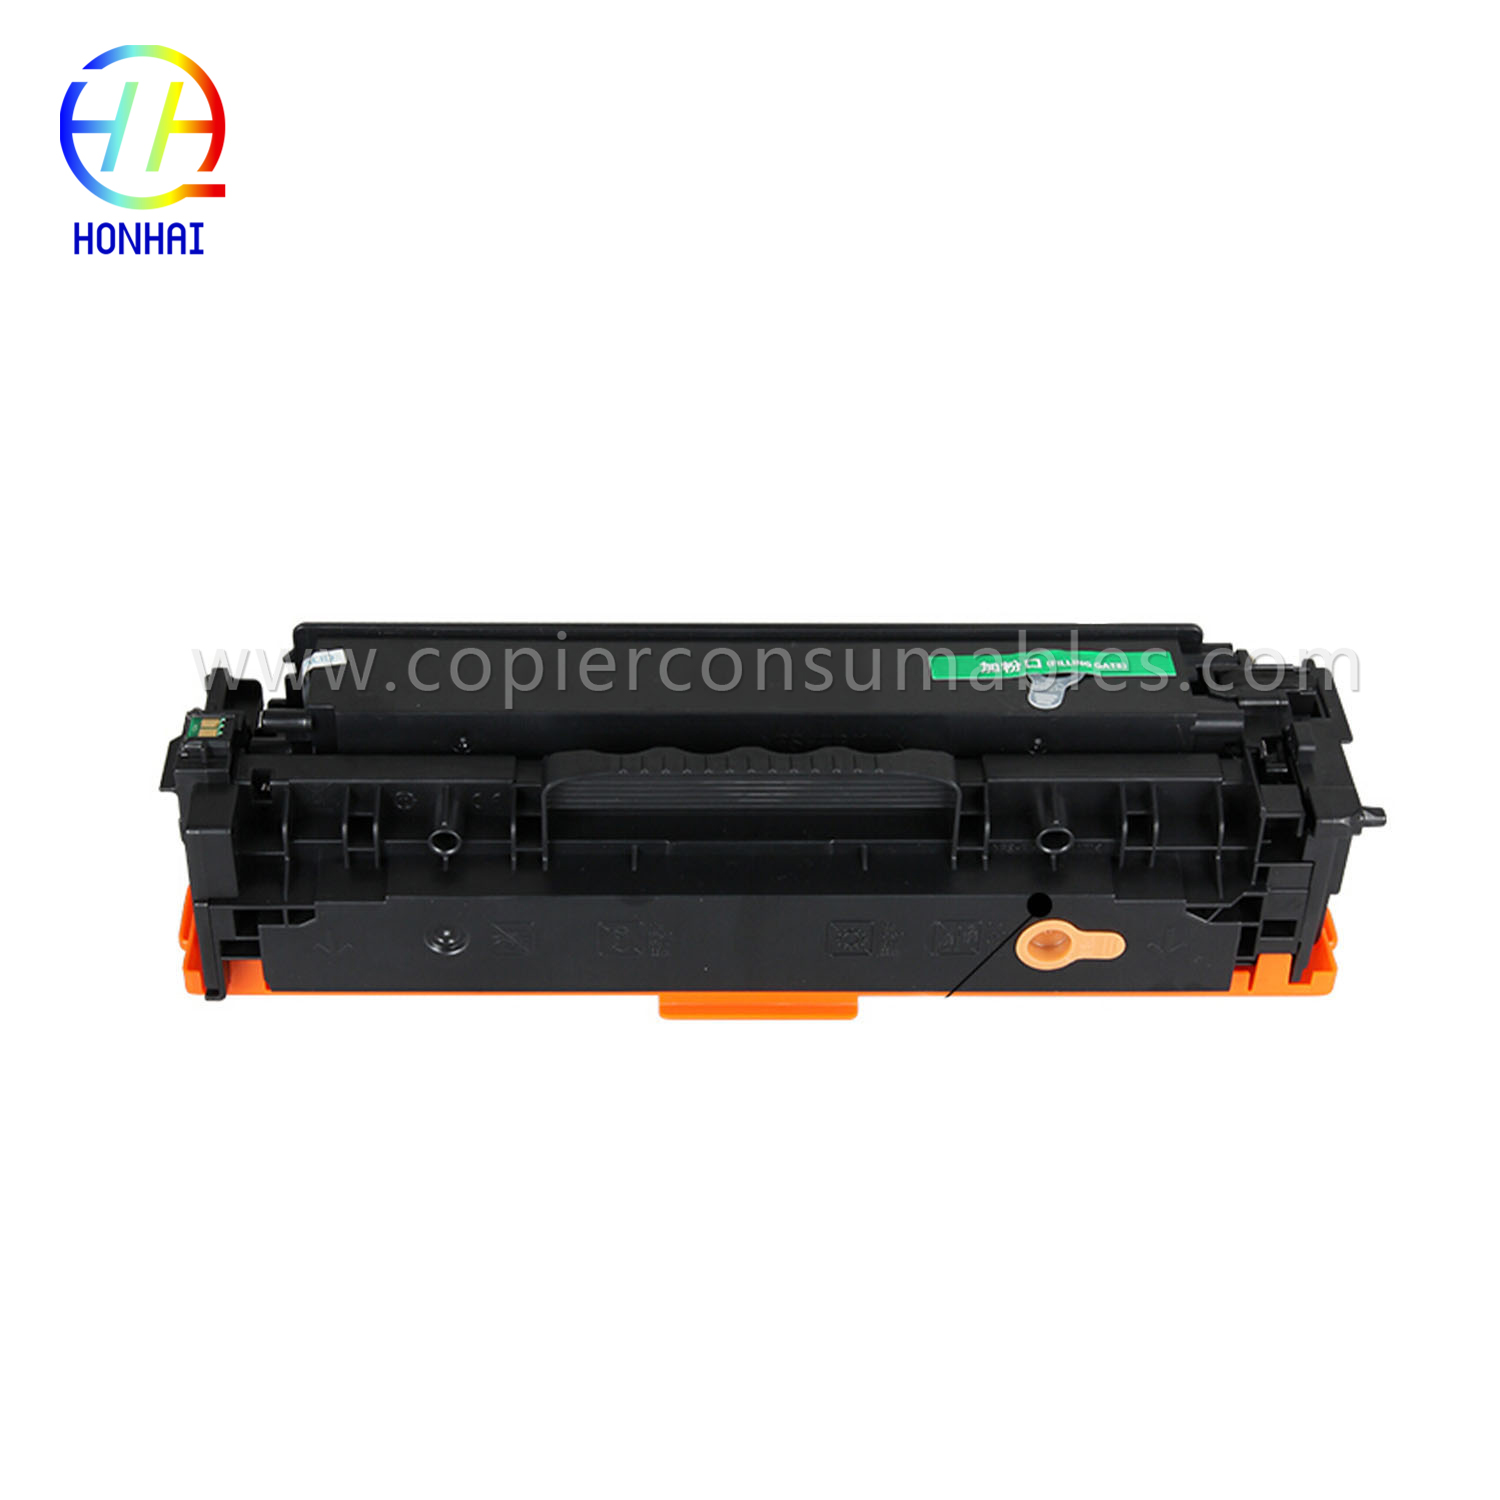 Toner Cartridge for HP Laserjet PRO 400 Color Mfp M451nw M451DN M451dw PRO 300 Color Mfp M375nw (CE410A) 拷贝